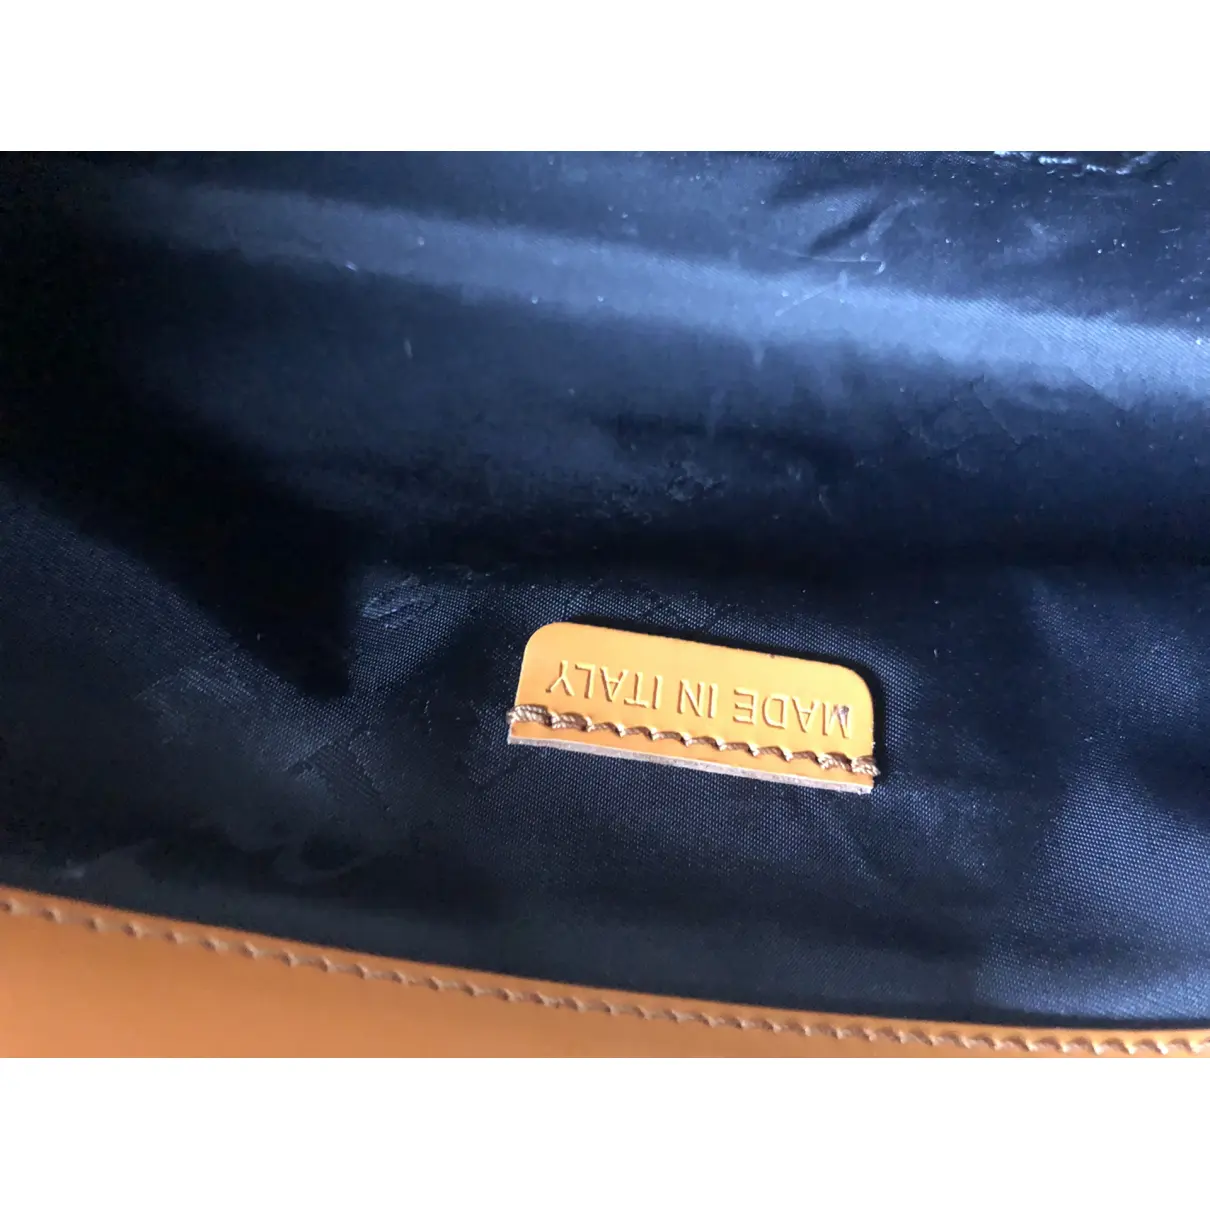 Luxury Burberry Handbags Women